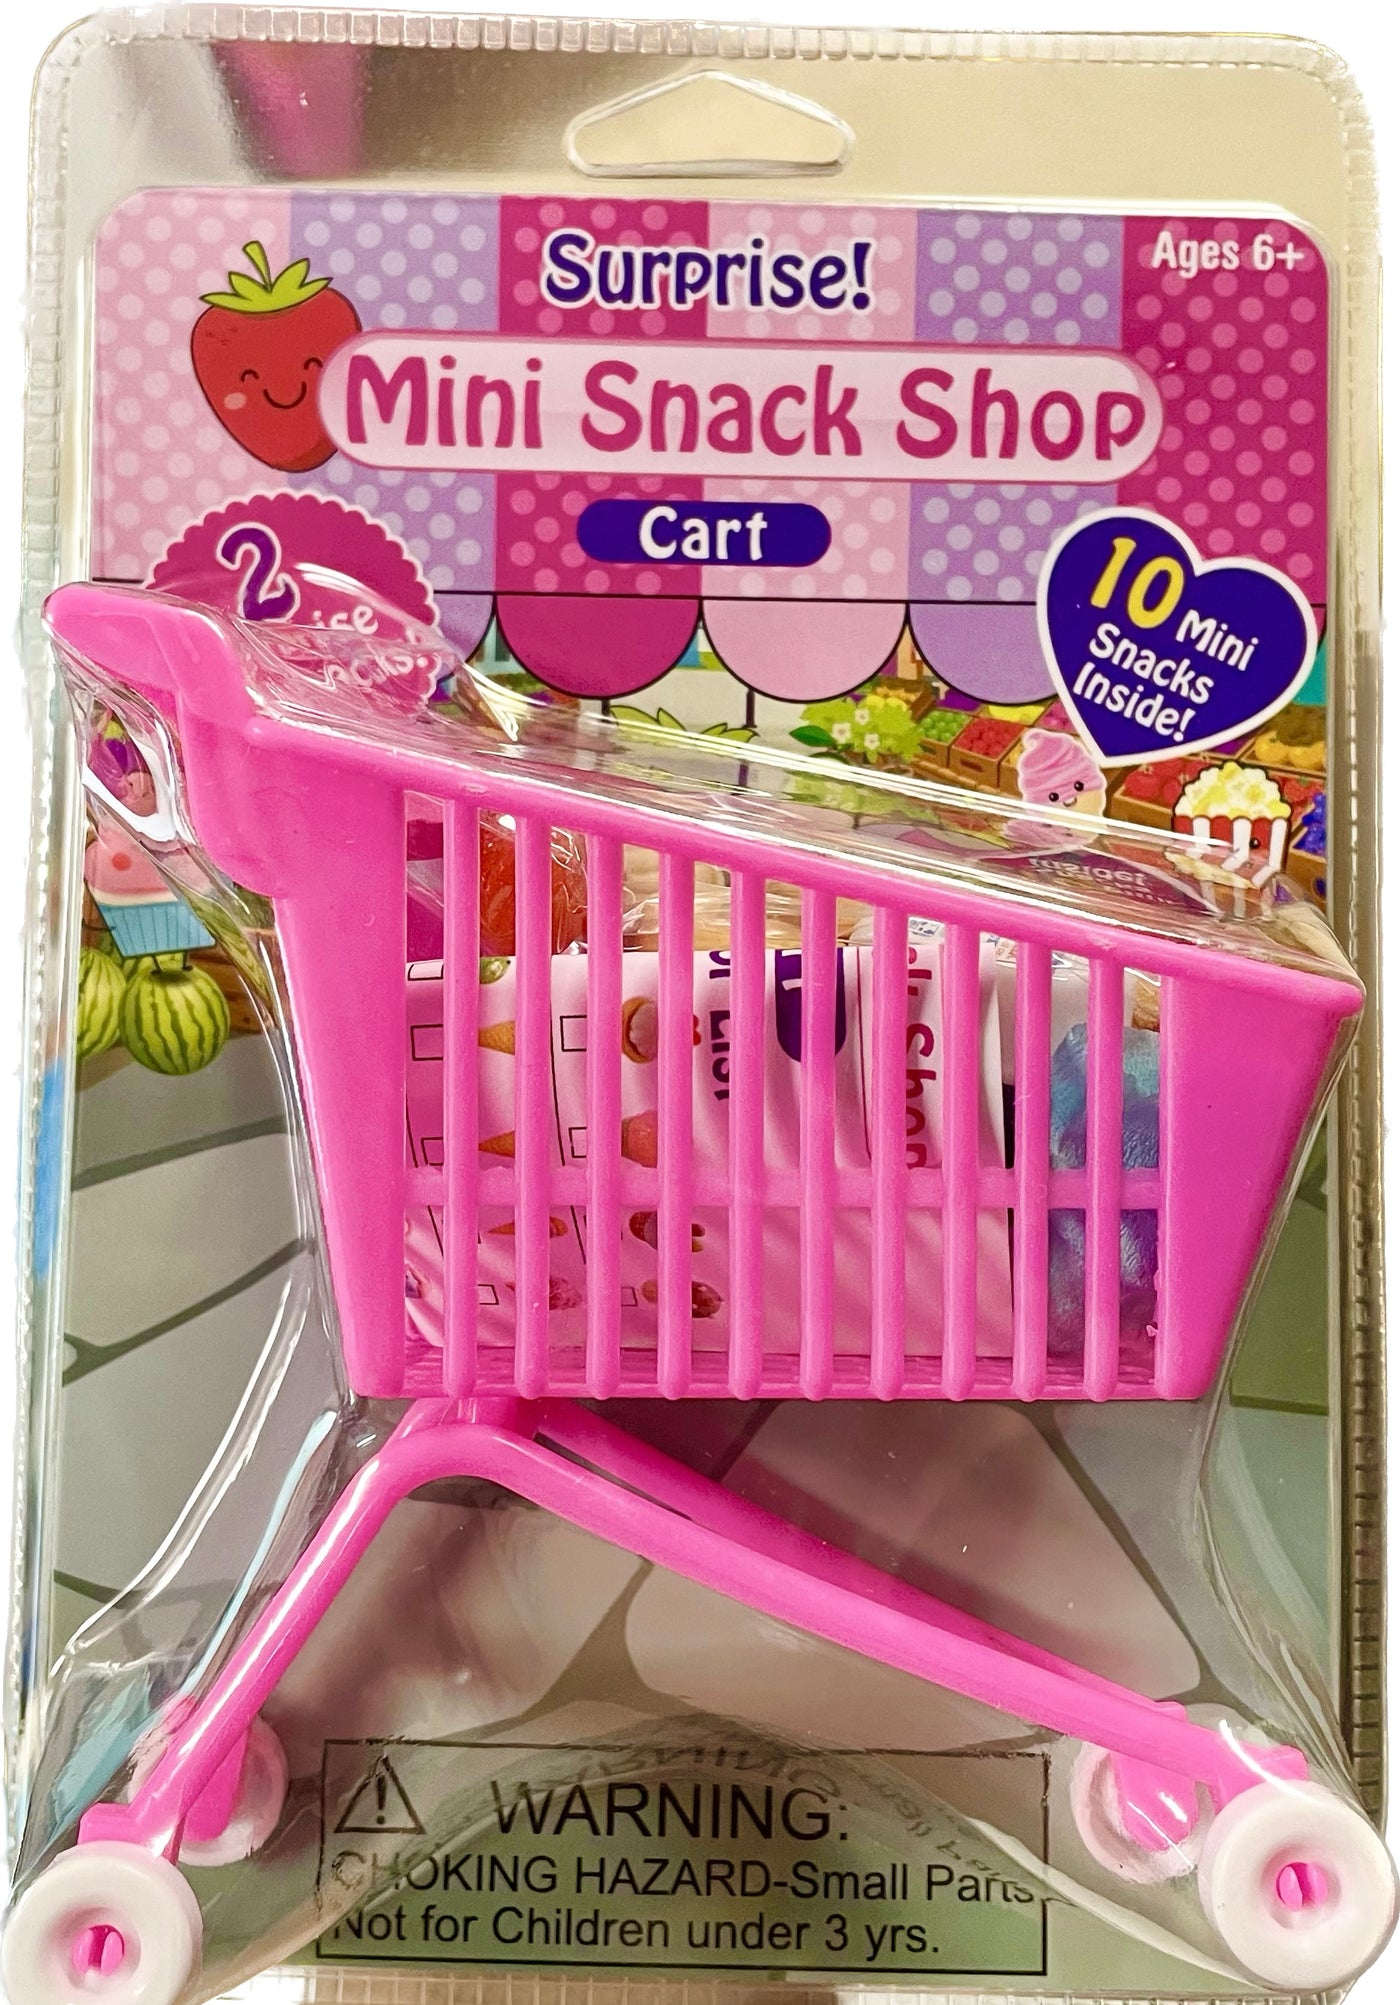 Mini Snack Shop Cart